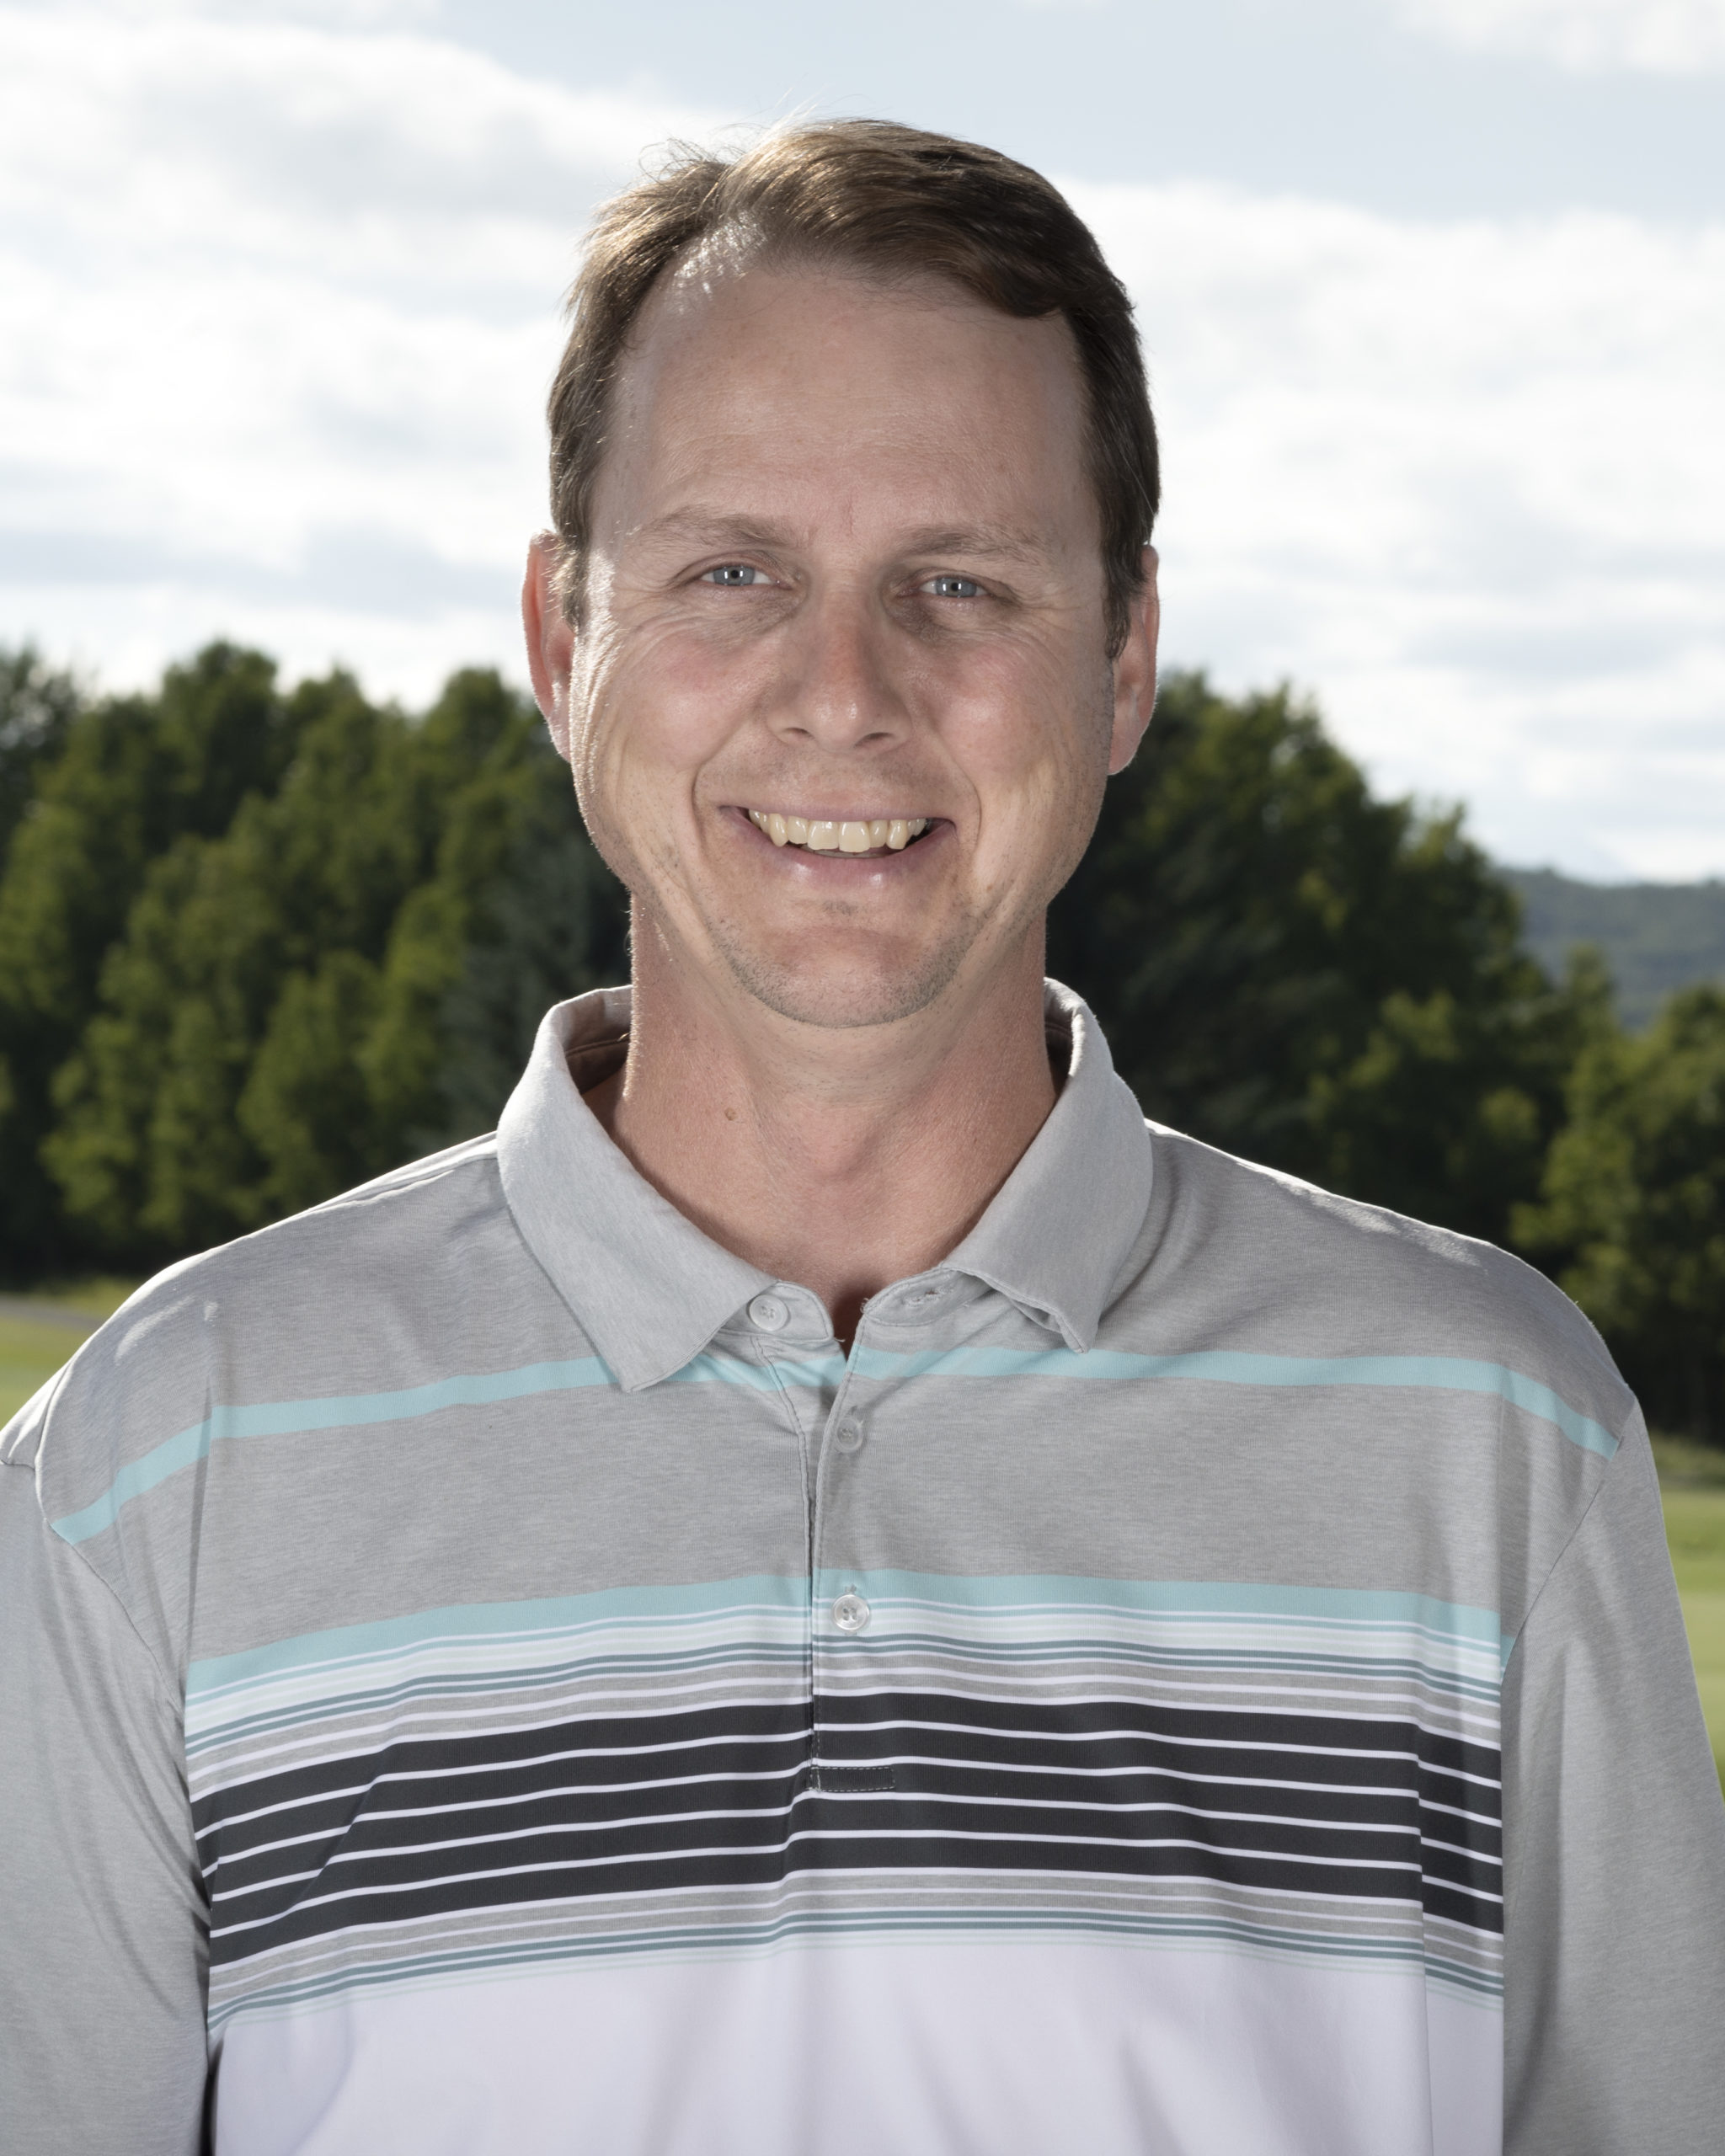 Cory Seaman - Class A PGA Professional